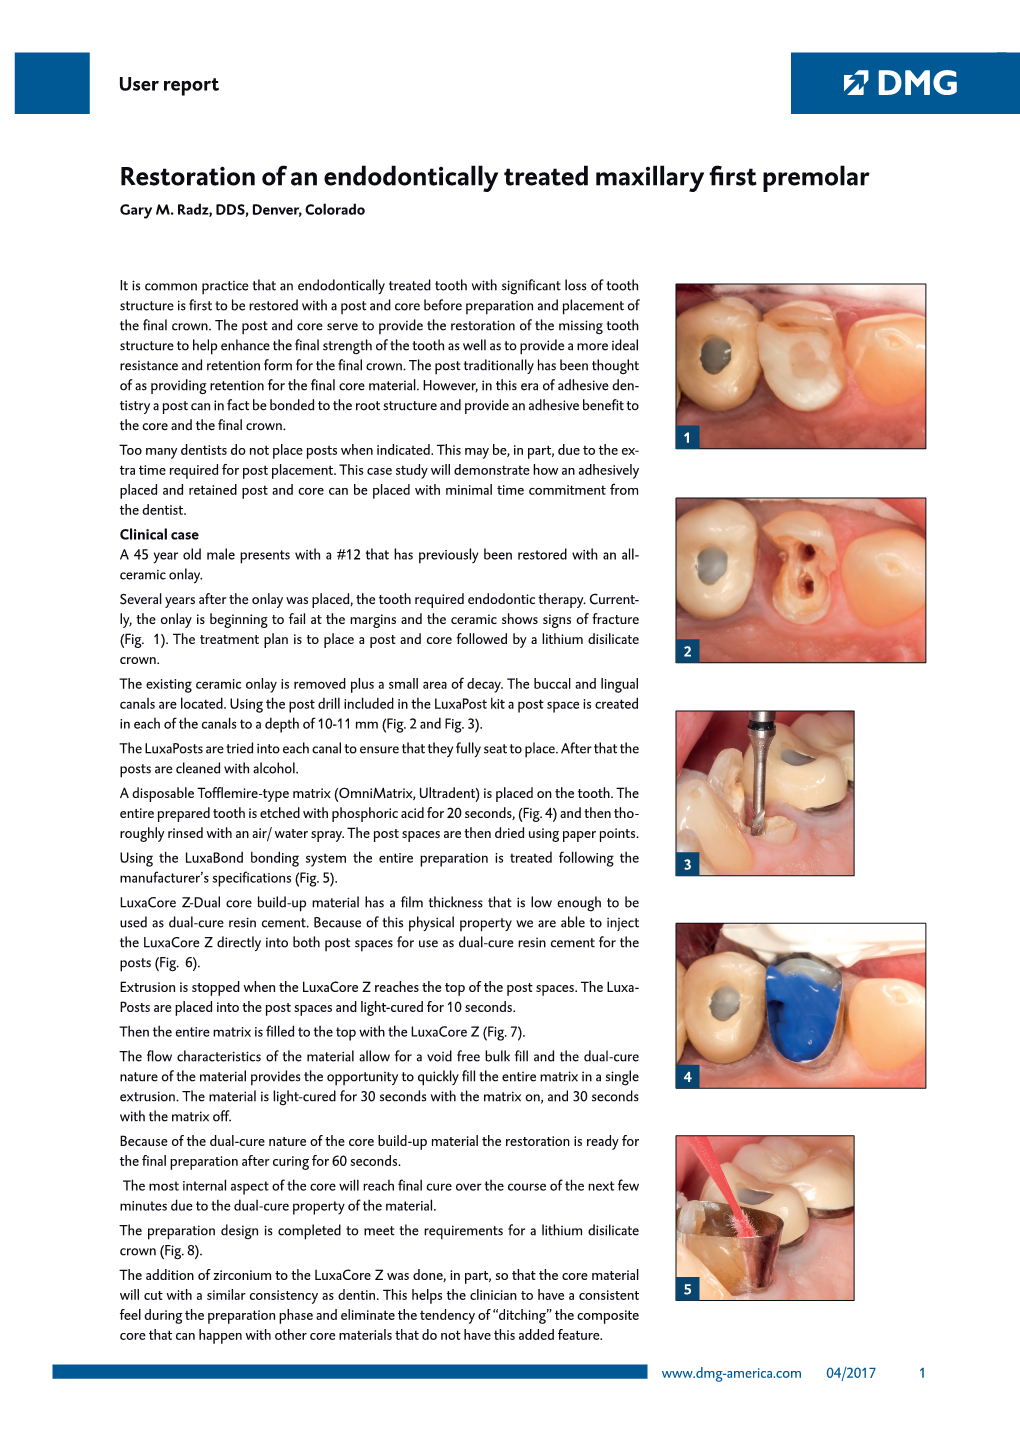 Restoration of an Endodontically Treated Maxillary First Premolar Gary M